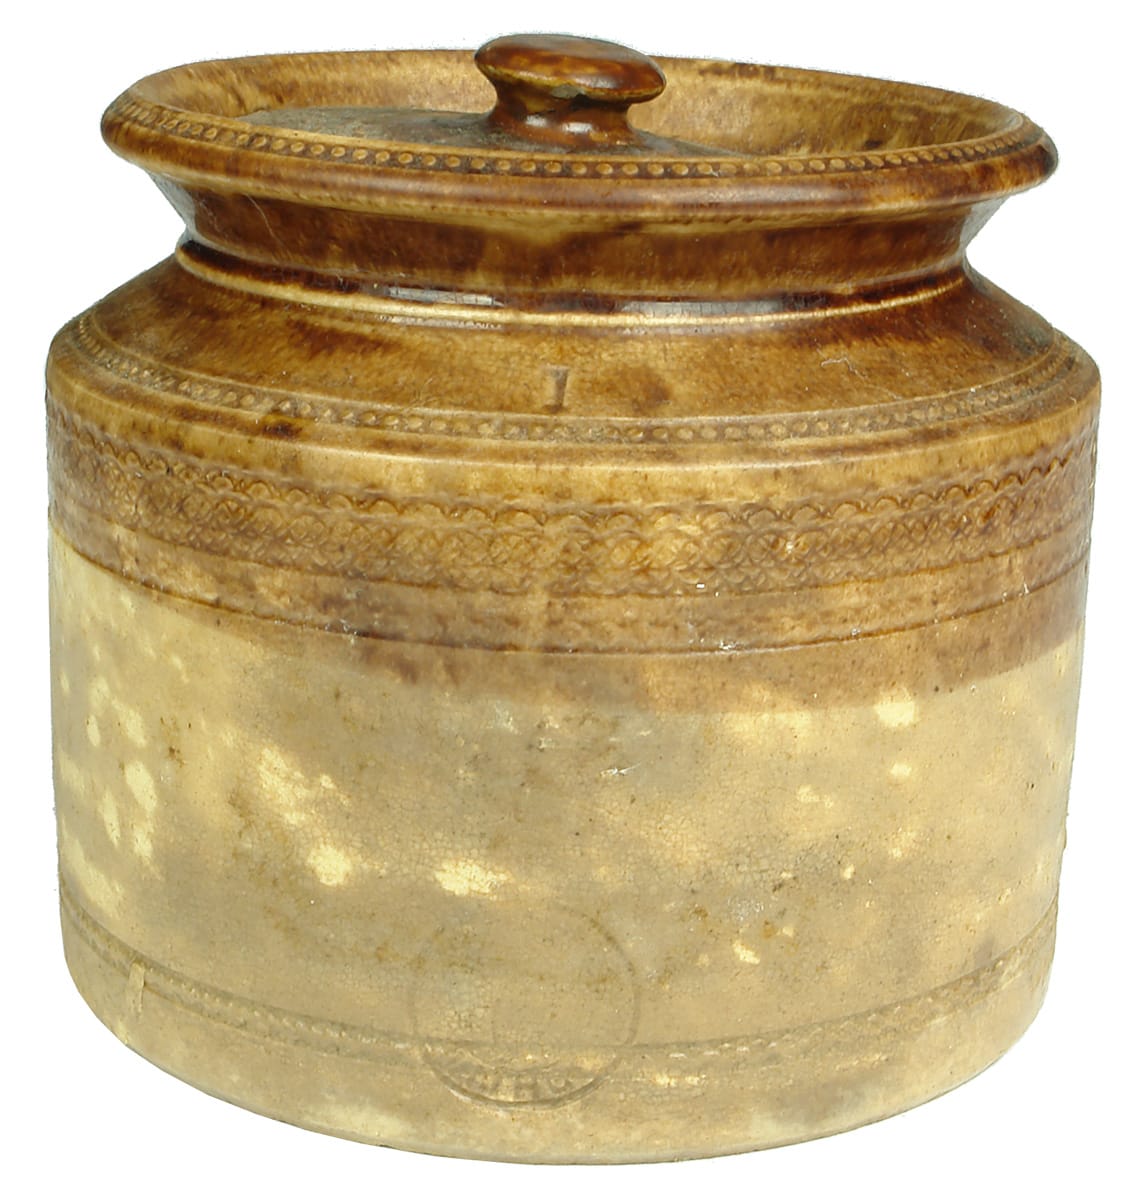 Lithgow Pottery Lidded Jar